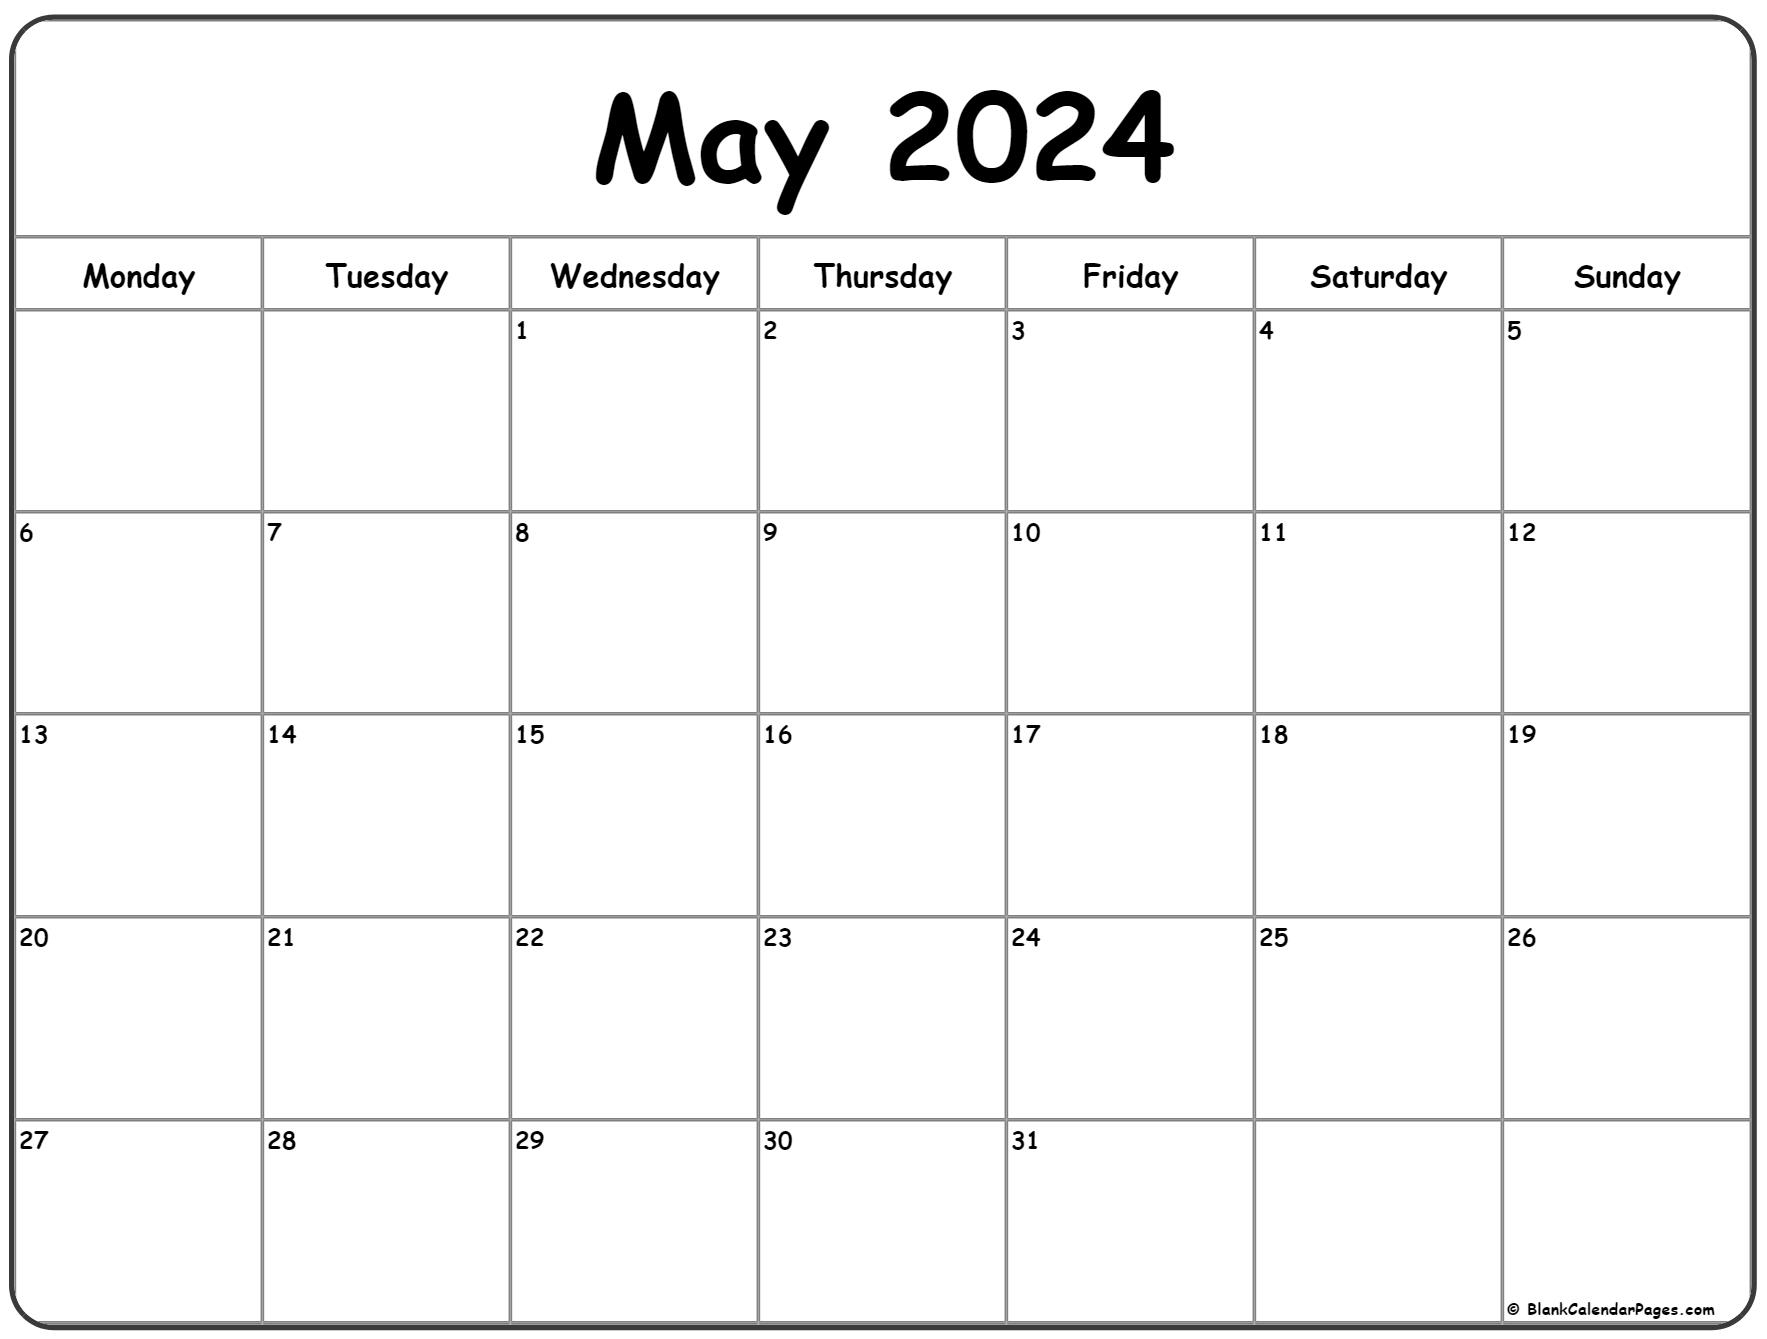 May 2024 Monday Calendar | Monday To Sunday for Printable May 2024 Calendar Template